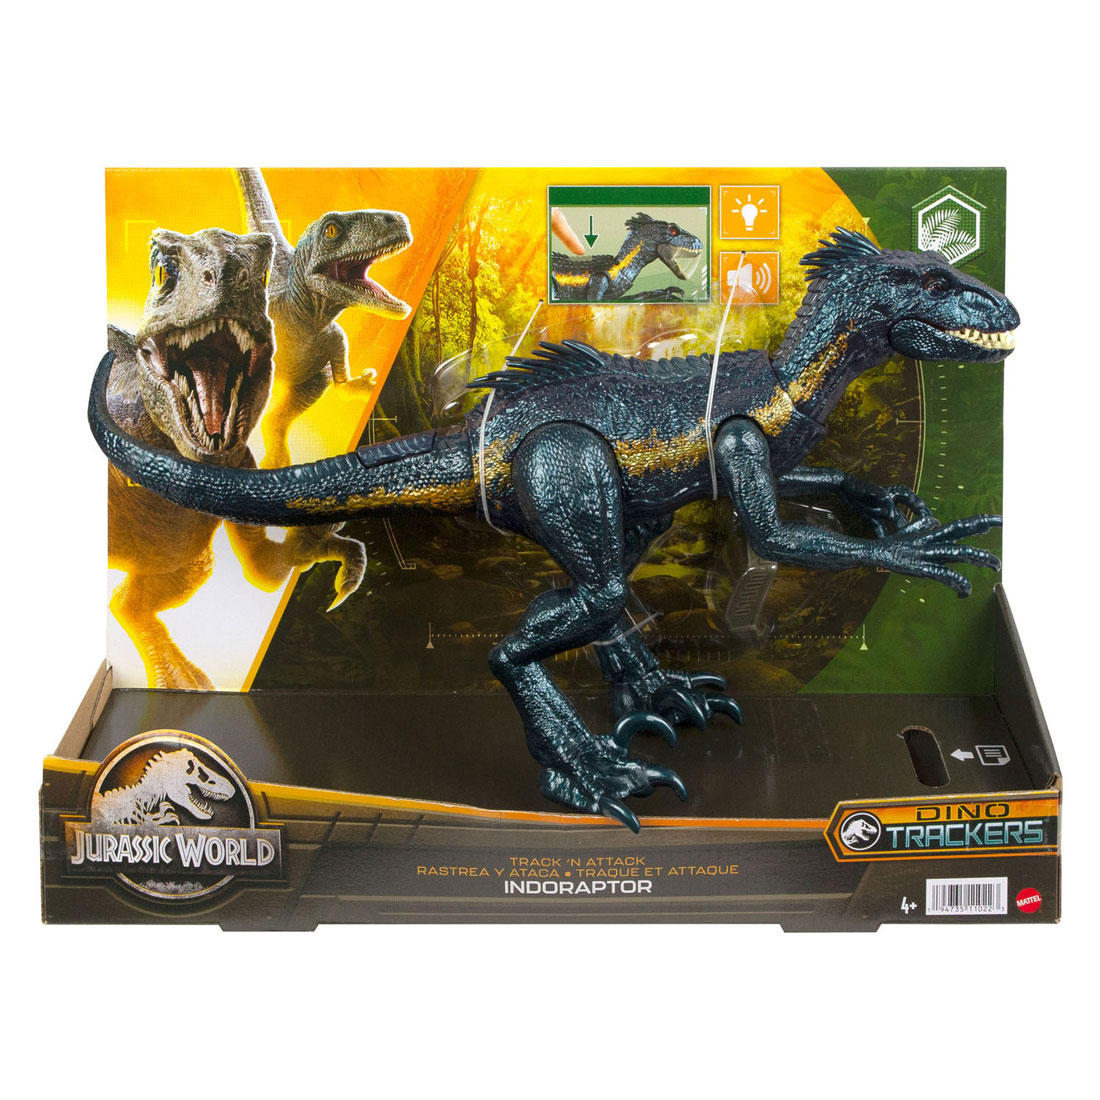 Figurine de jeu Jurassic World Track N Attack Indorraptor Dino